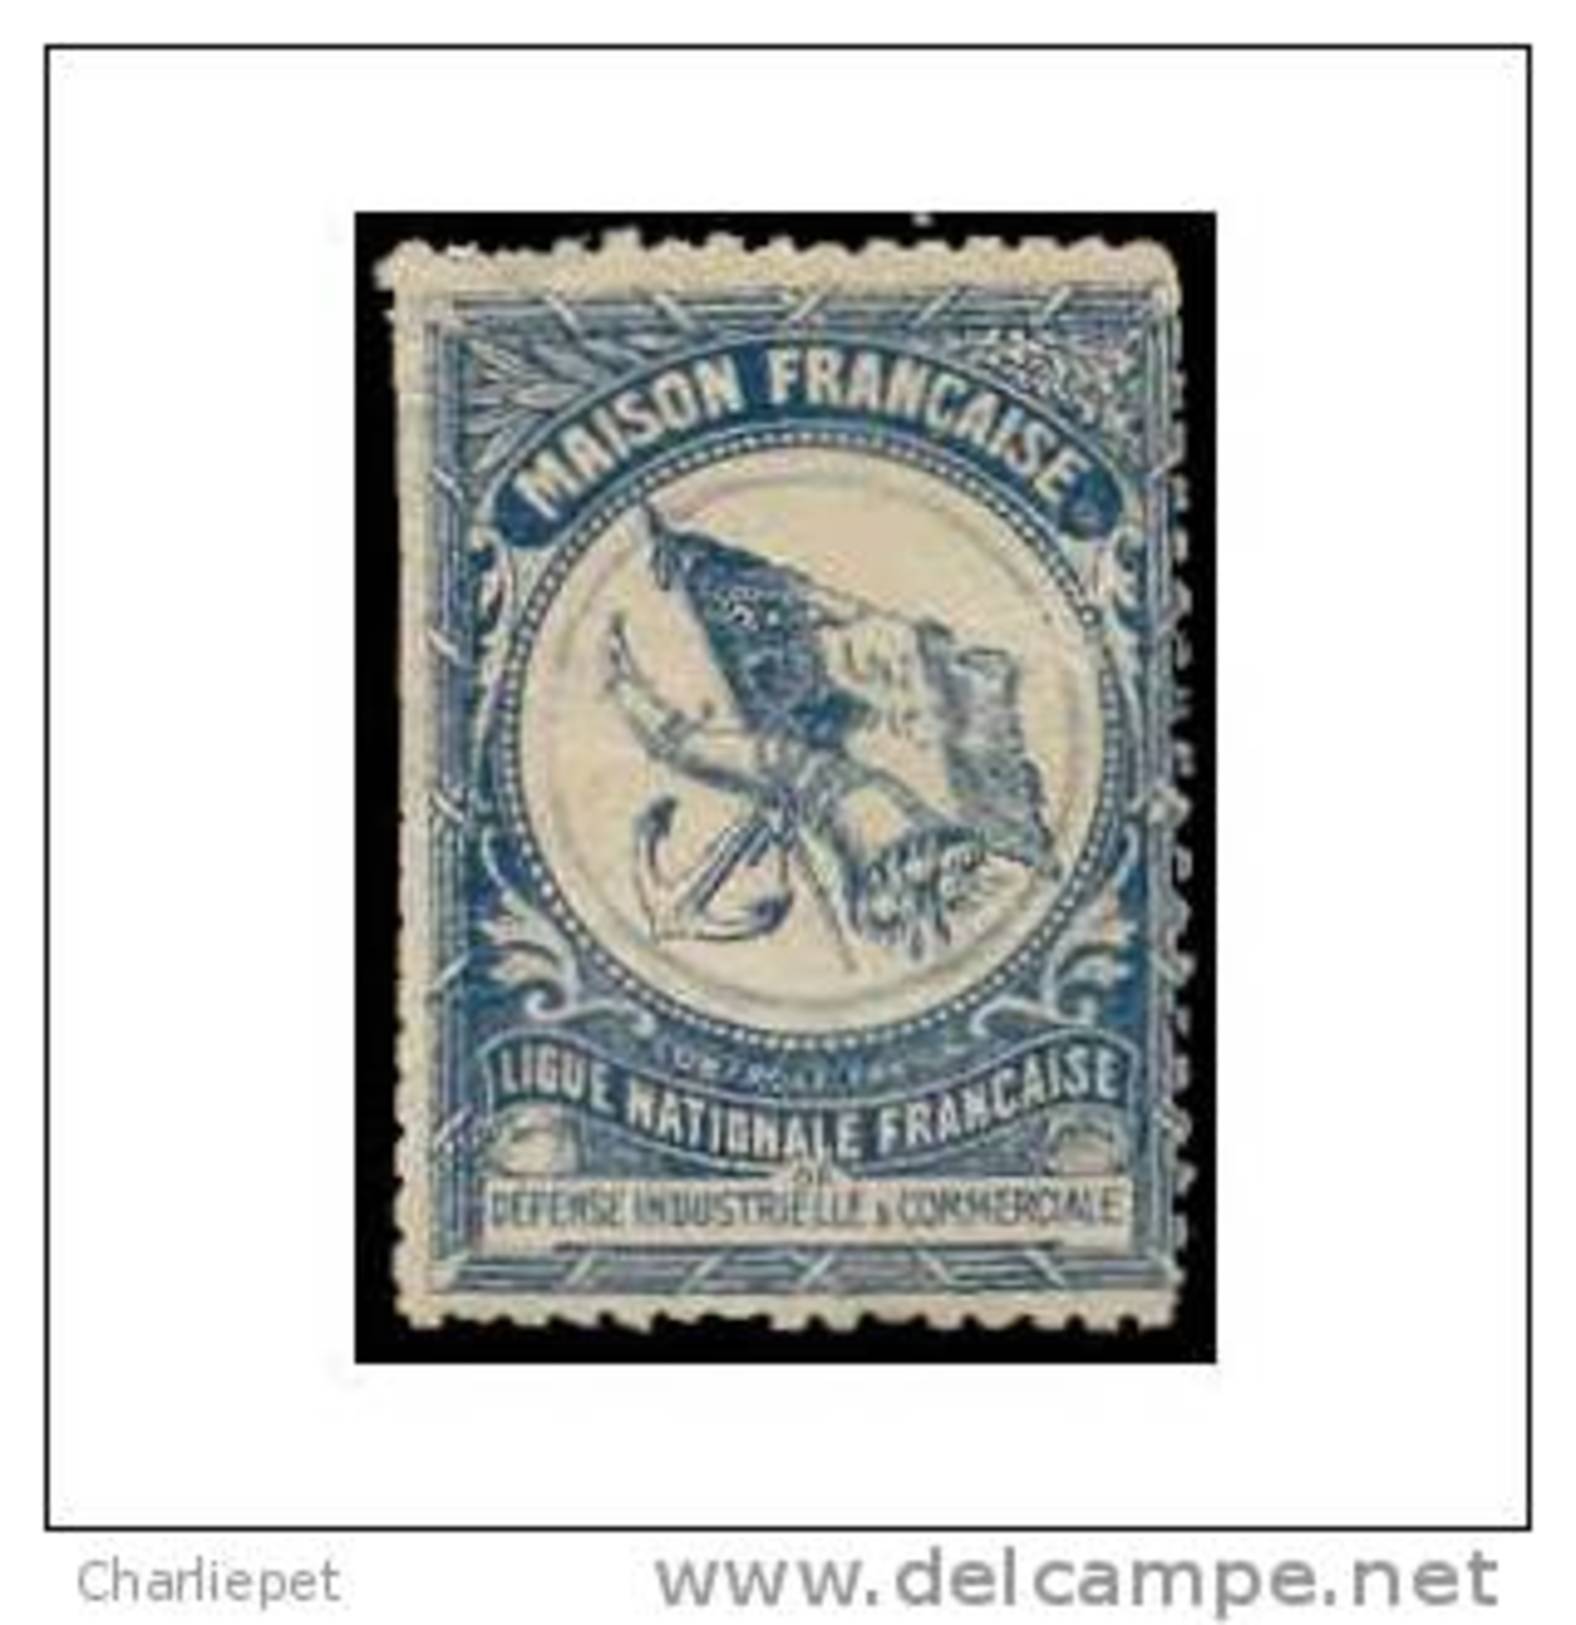 France WWI Maison Francaise Guarantee Stamp  Military Heritage Poster Stamp - Military Heritage